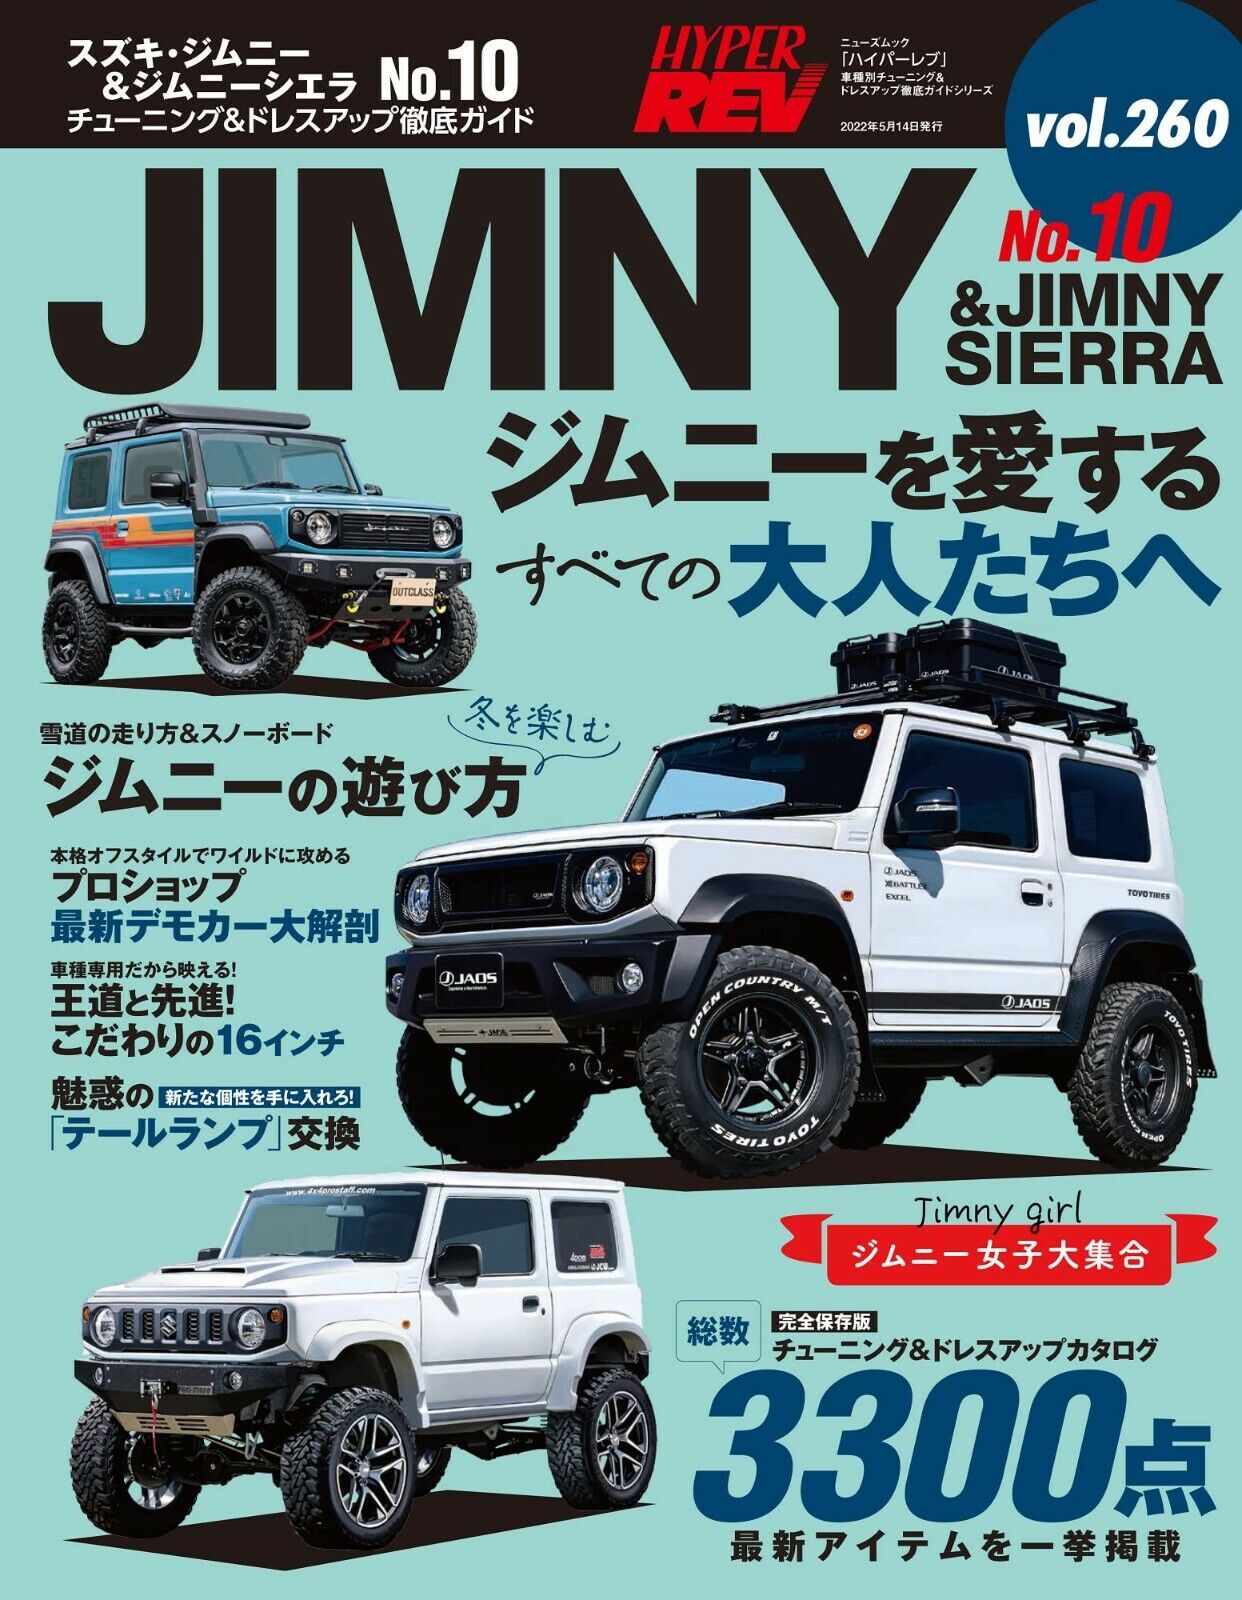 HYPER REV SUZUKI JIMNY & SIERRA No.10 Car Tuning Dress Up Guide Book | Japan